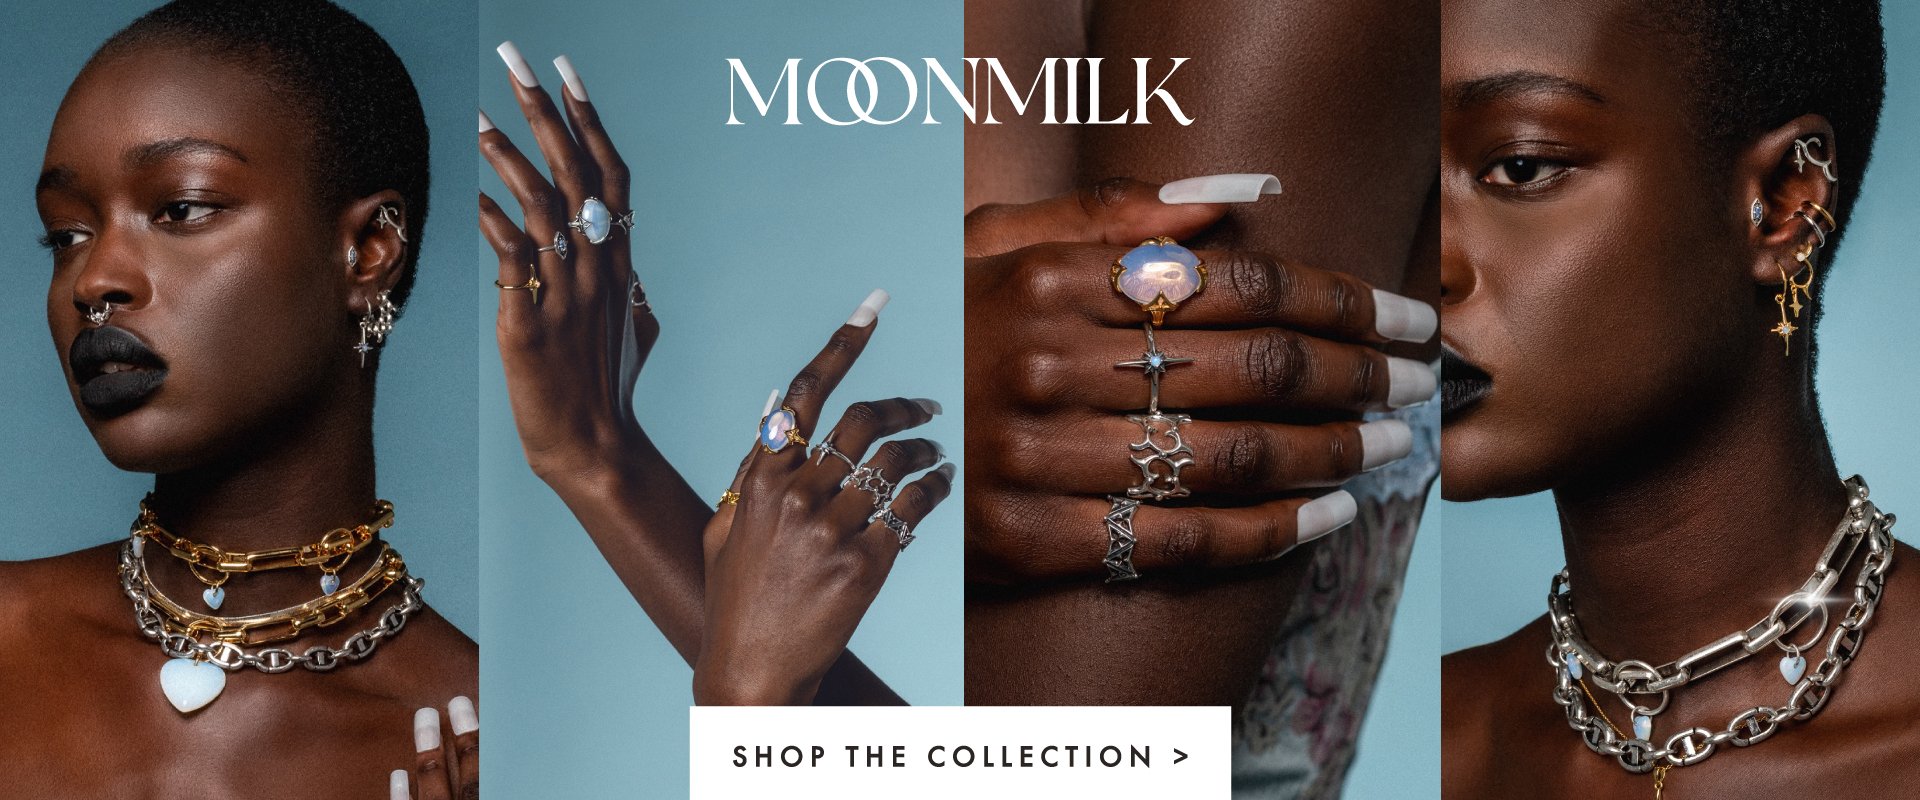 Shop Moonmilk Collection